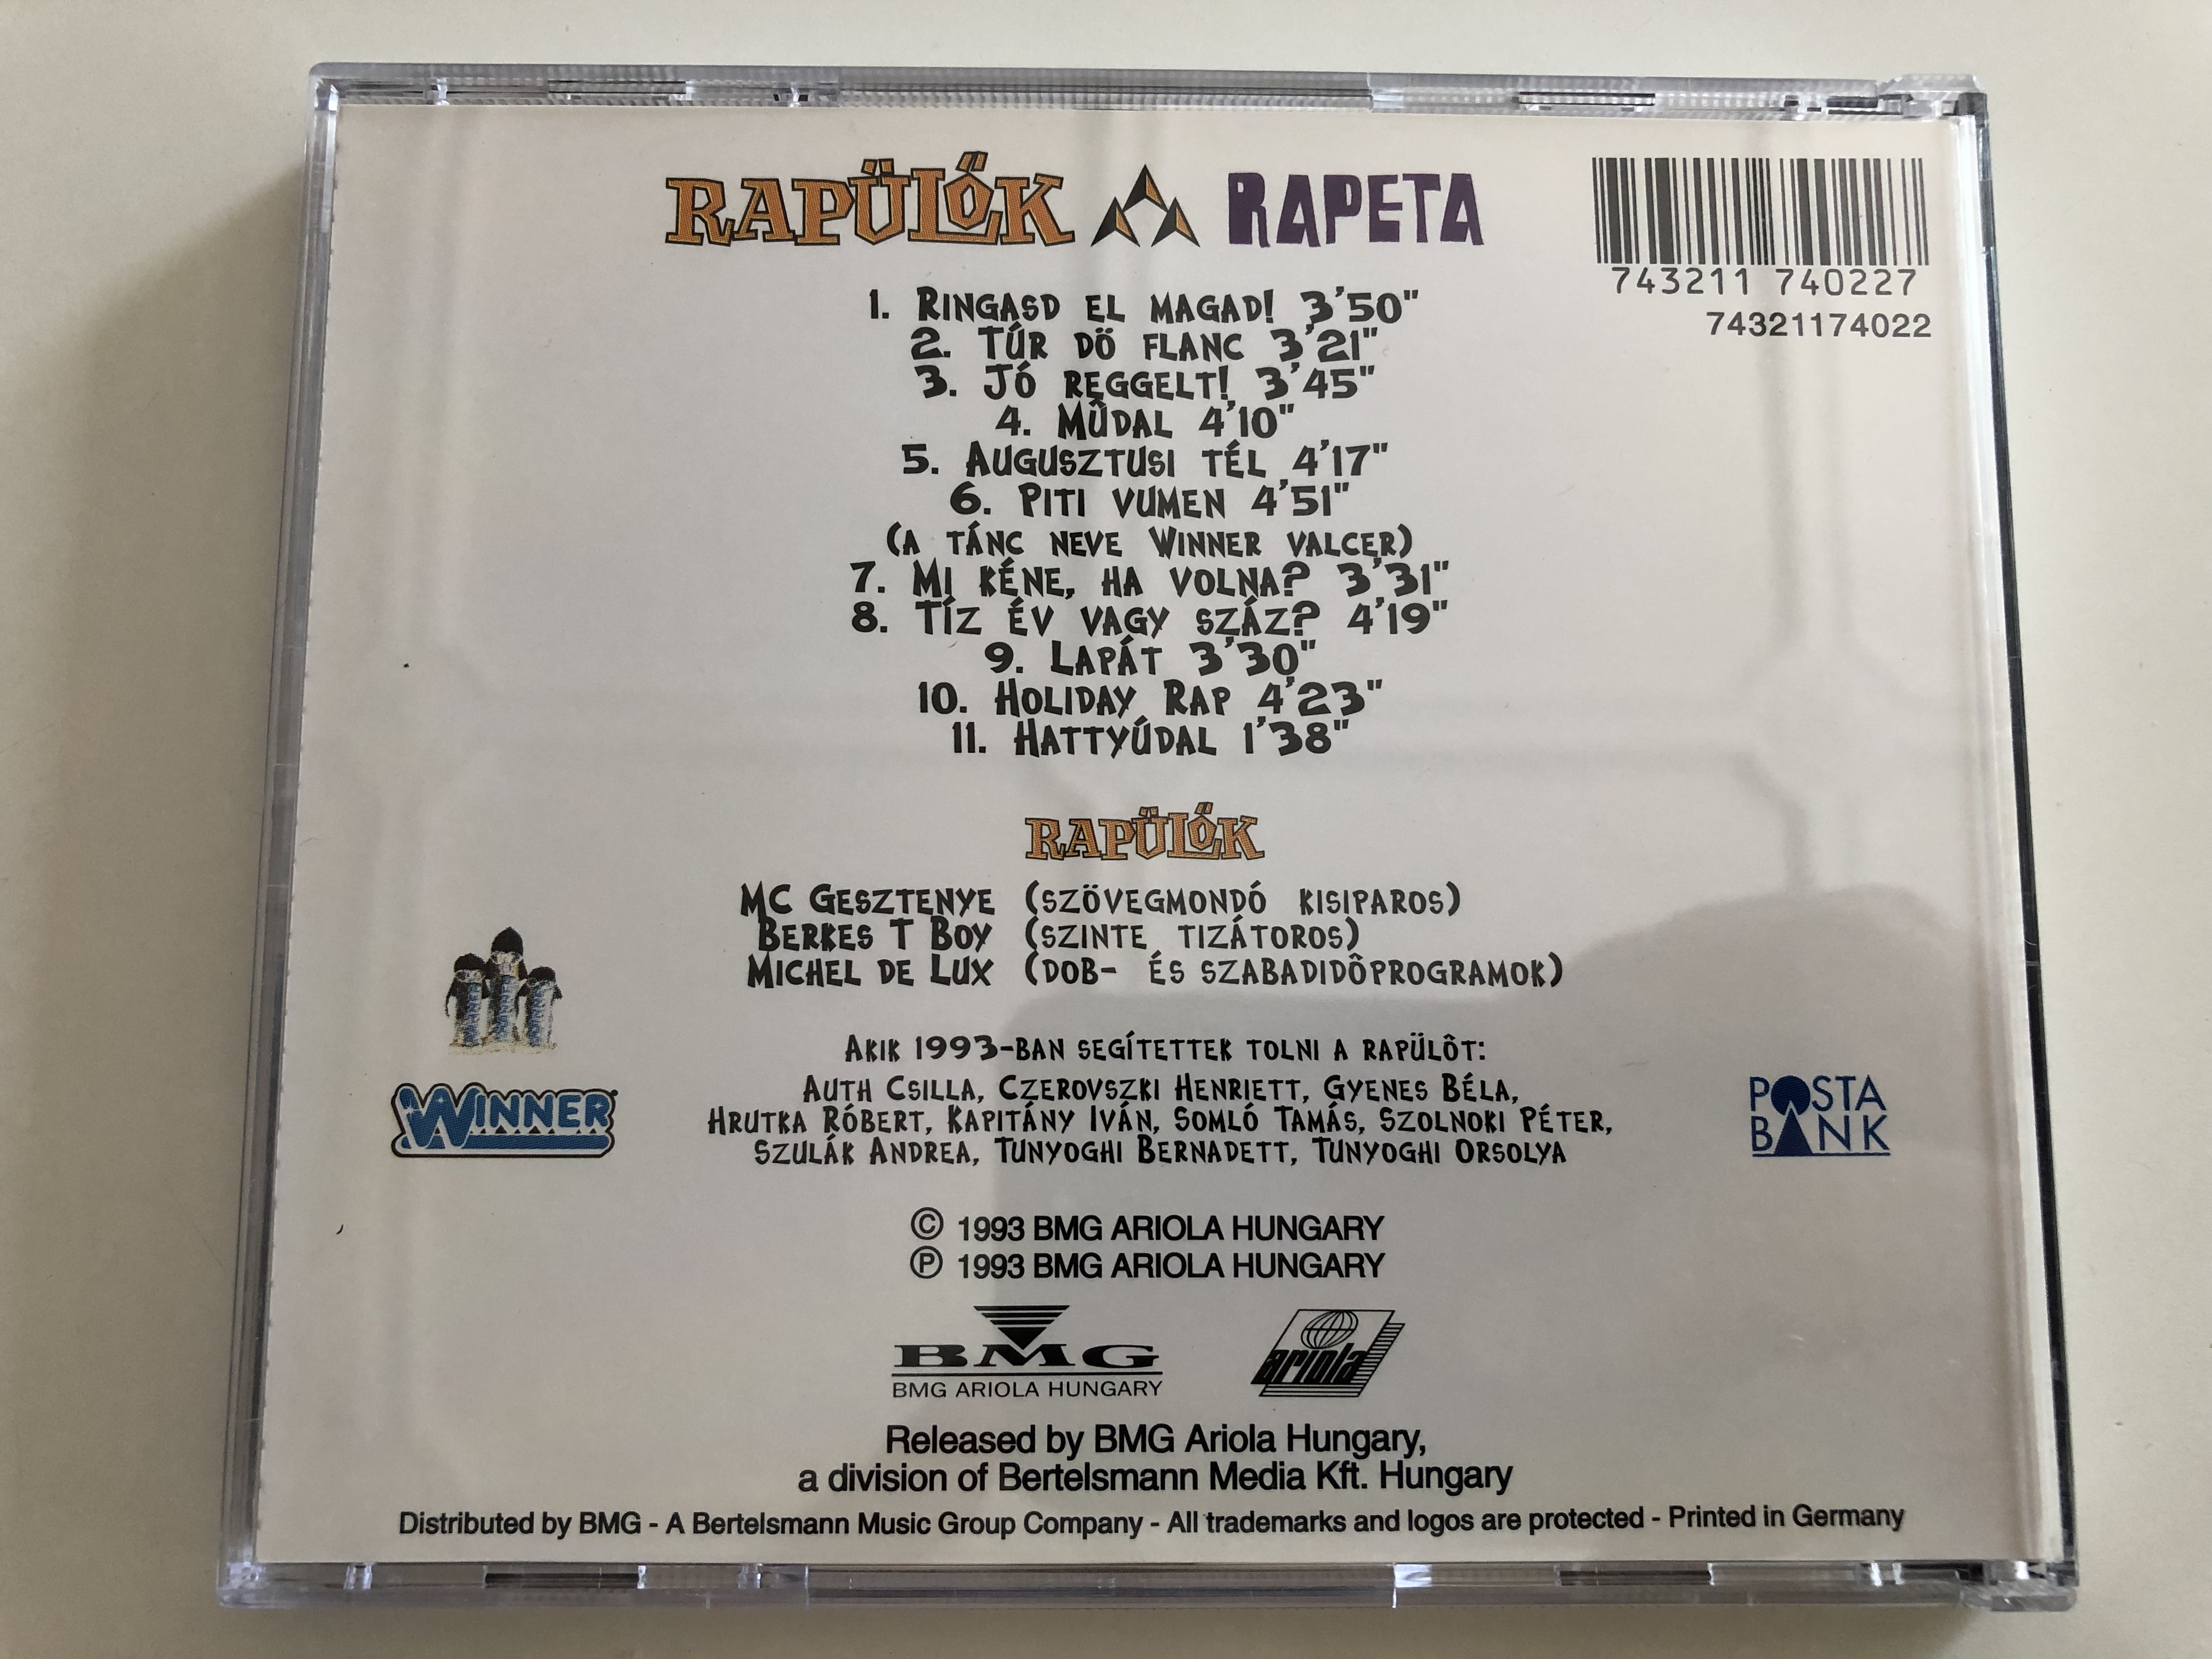 rap-l-k-rapeta-j-reggelt-piti-vumen-mi-k-ne-ha-volna-lap-t-audio-cd-1993-bmg-ariola-hungary-10-.jpg